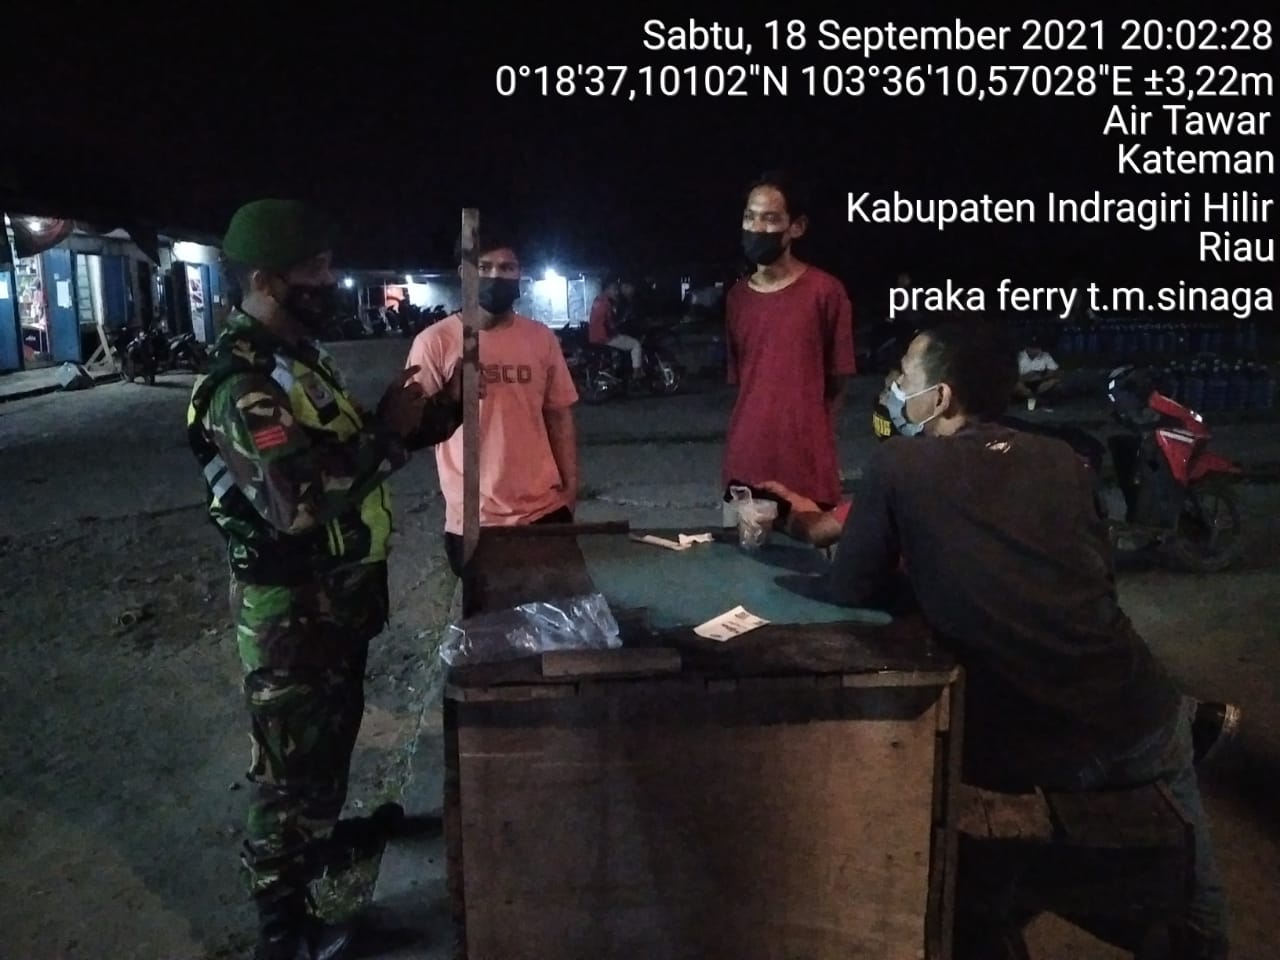 Personel Koramil 06/Kateman Praka Ferry Sinaga Himbau Warga Tagaraja Taati Prokes